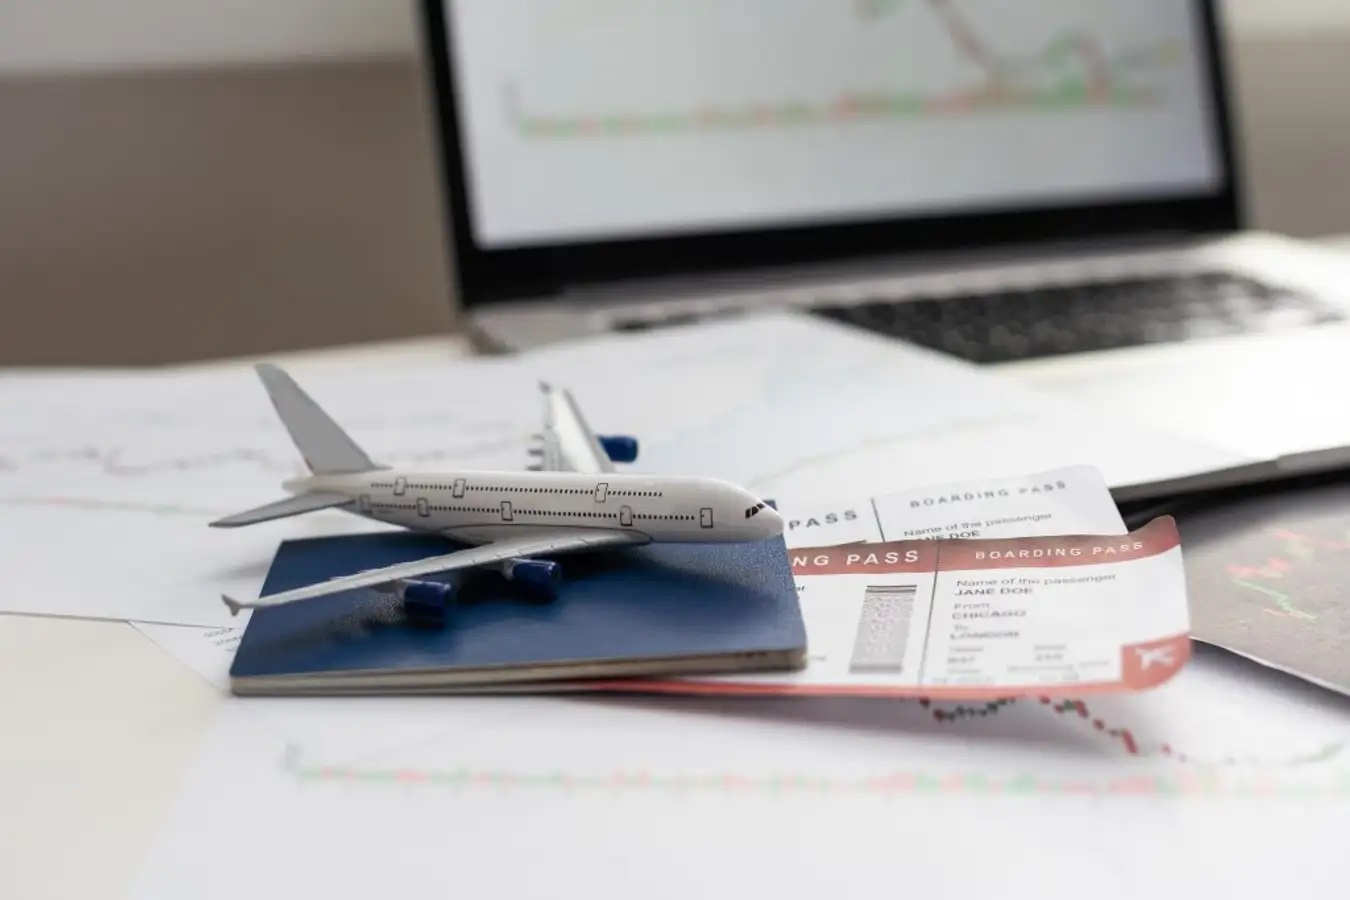 Terbang Nyaman dan Aman, Cek Jenis Pesawat di Aplikasi Ini Sebelum Pesan Tiket